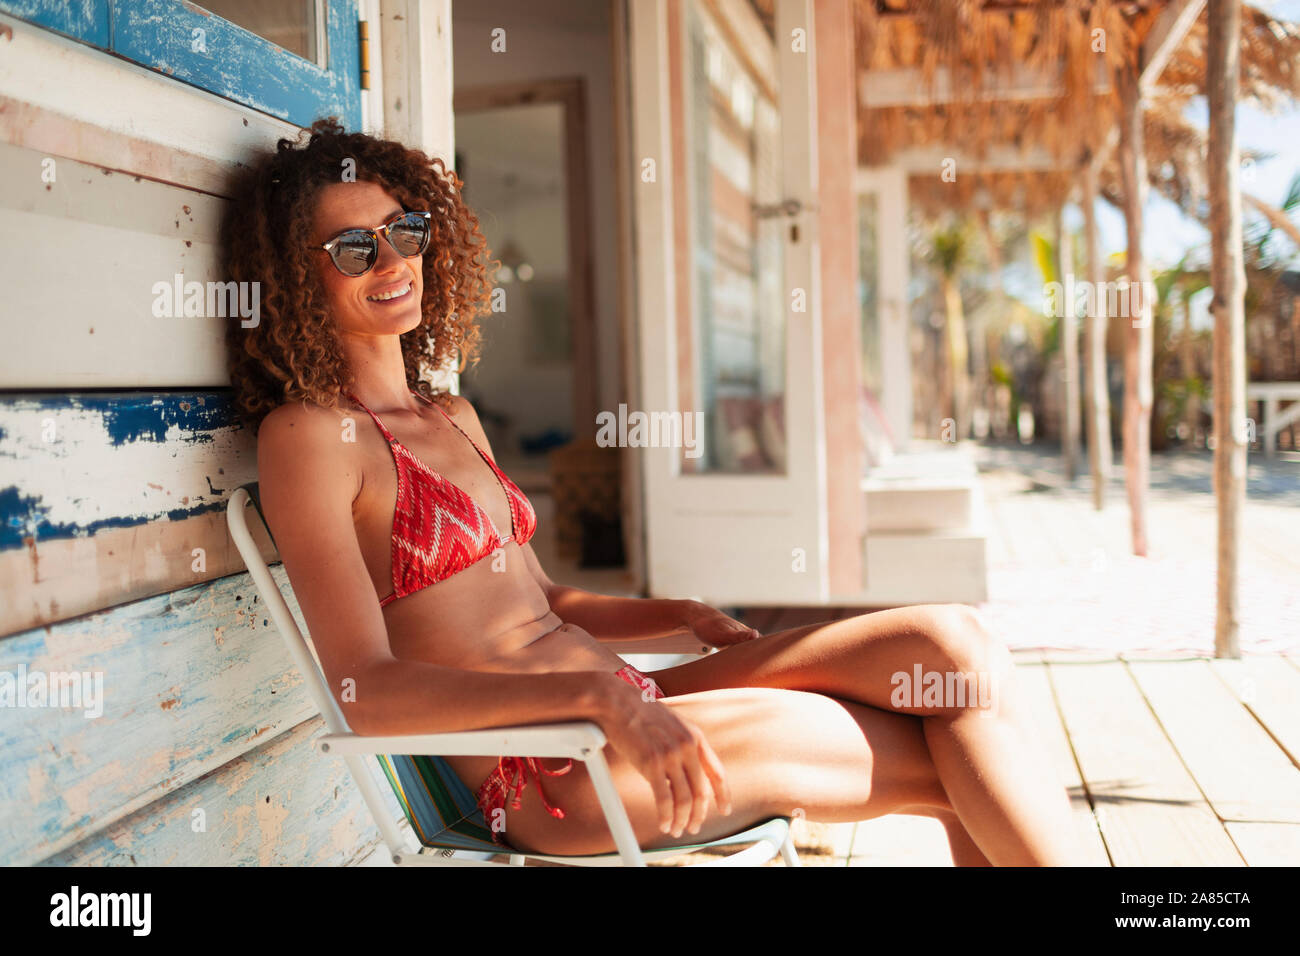 Portrait carefree young woman in bikini relaxing on beach hut patio Stock Photo